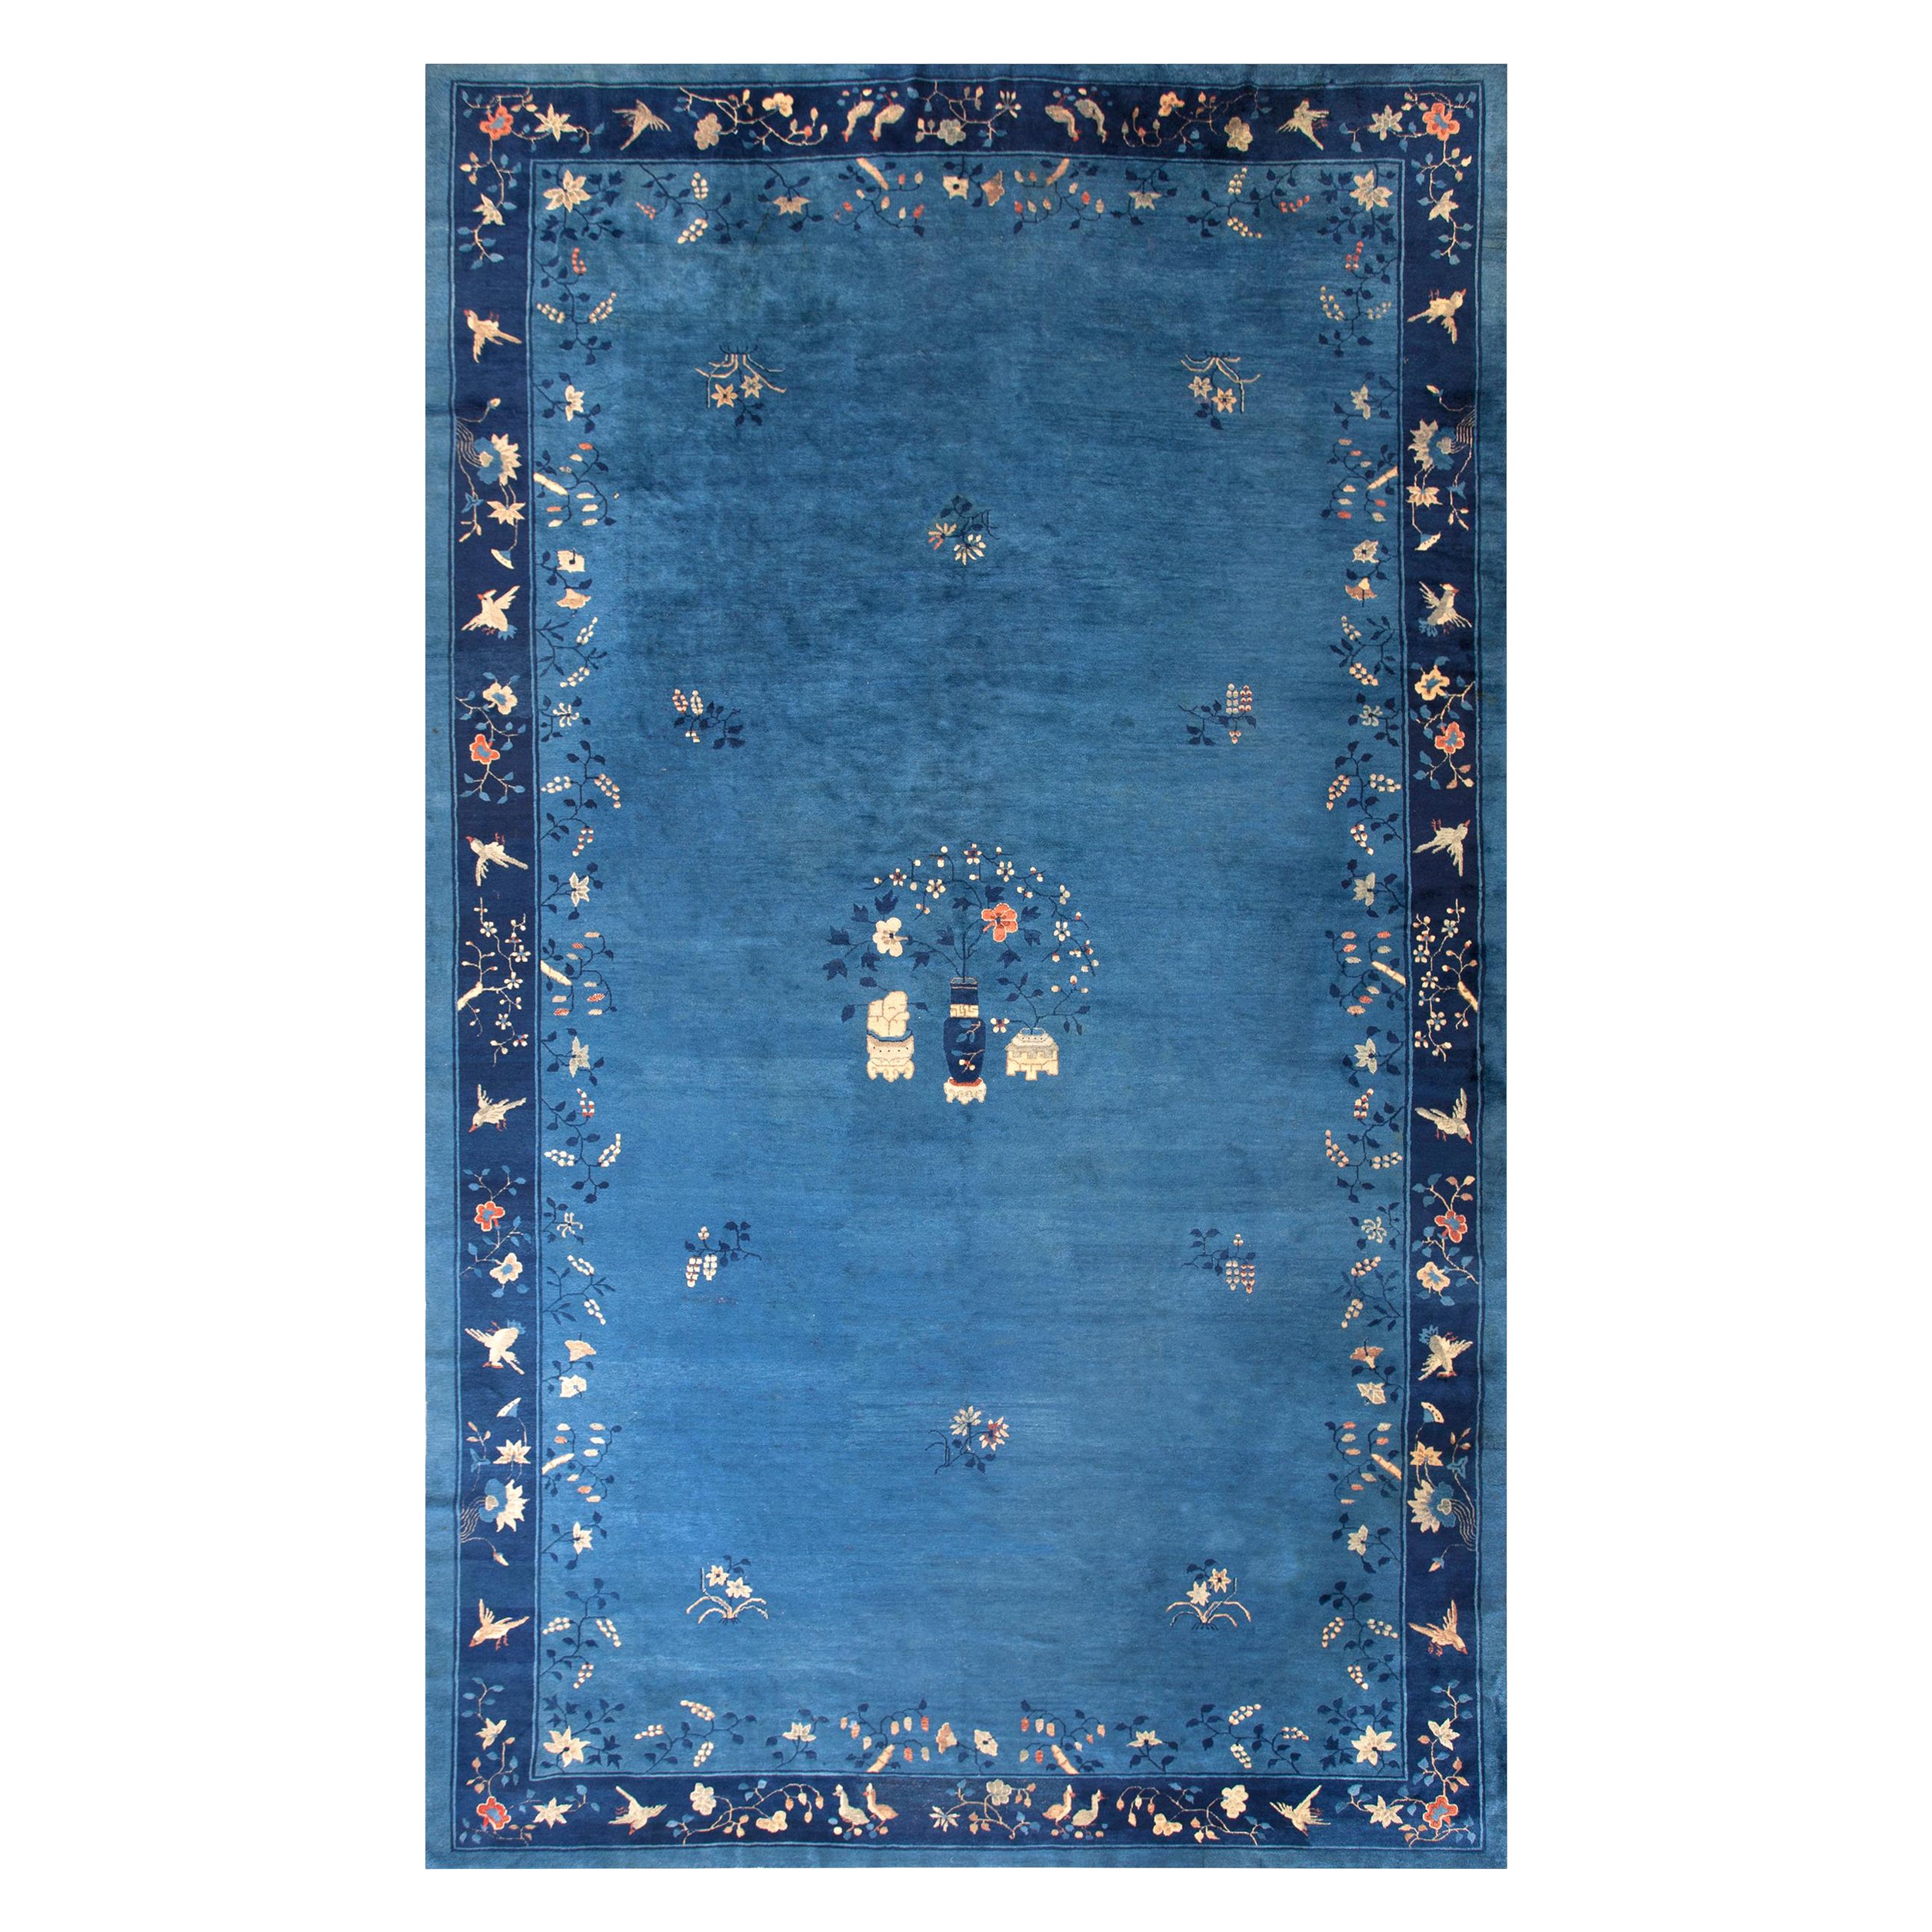 Early 20th Century Chinese Peking Carpet ( 10'2" x 17' - 310 x 518 )